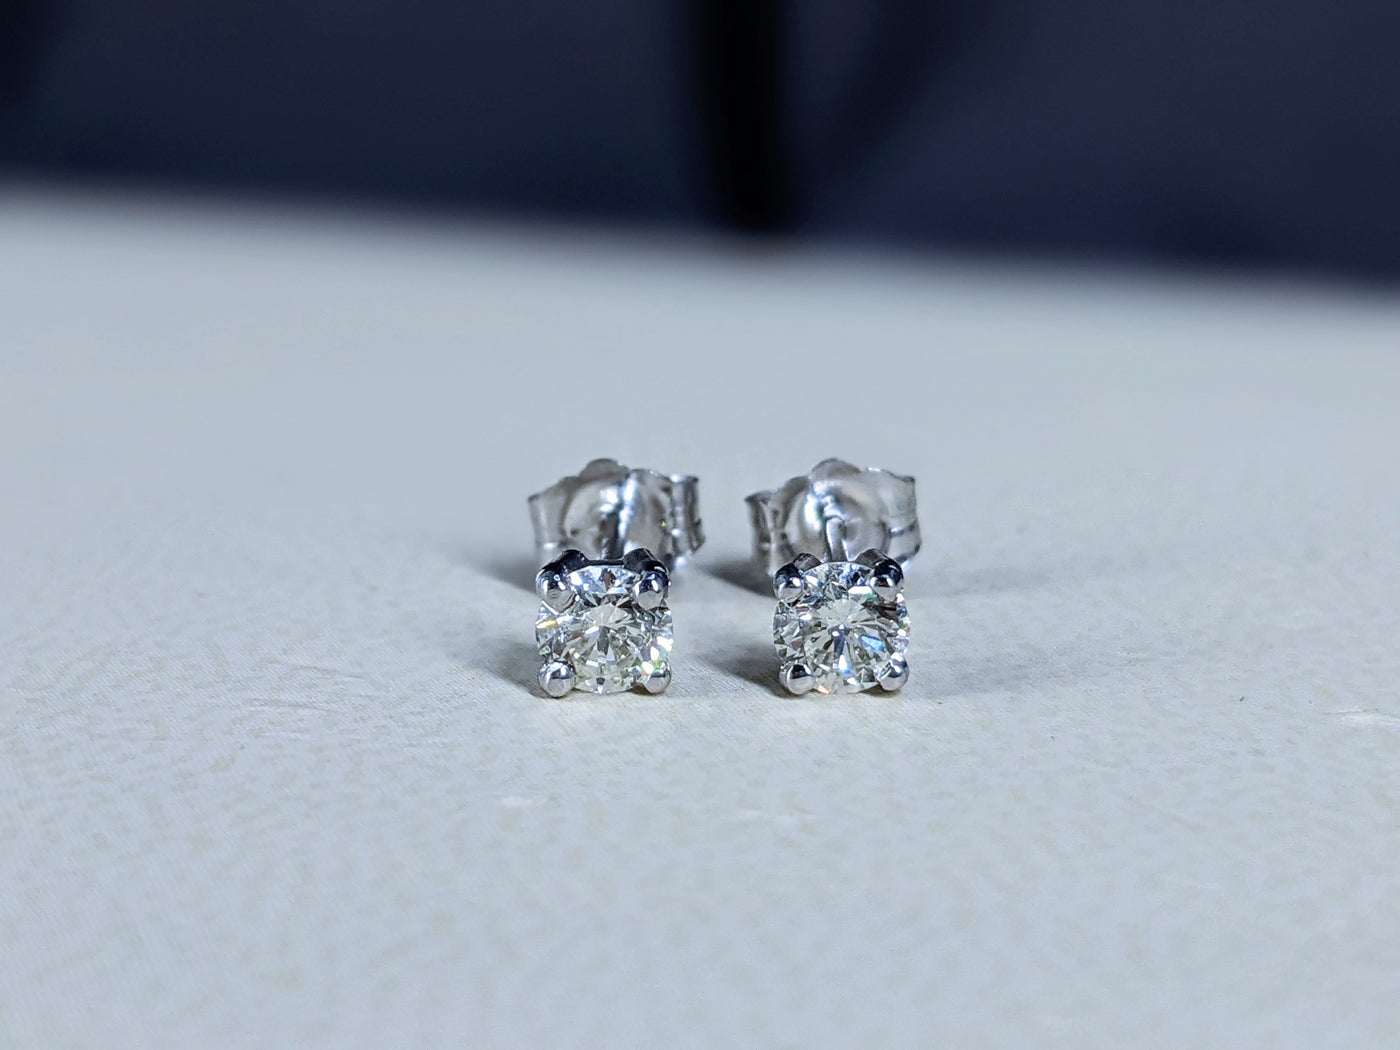 Platinum 4-Prong Round Cut Diamond Stud Earrings .50 ct. tw. (G-H, VS)